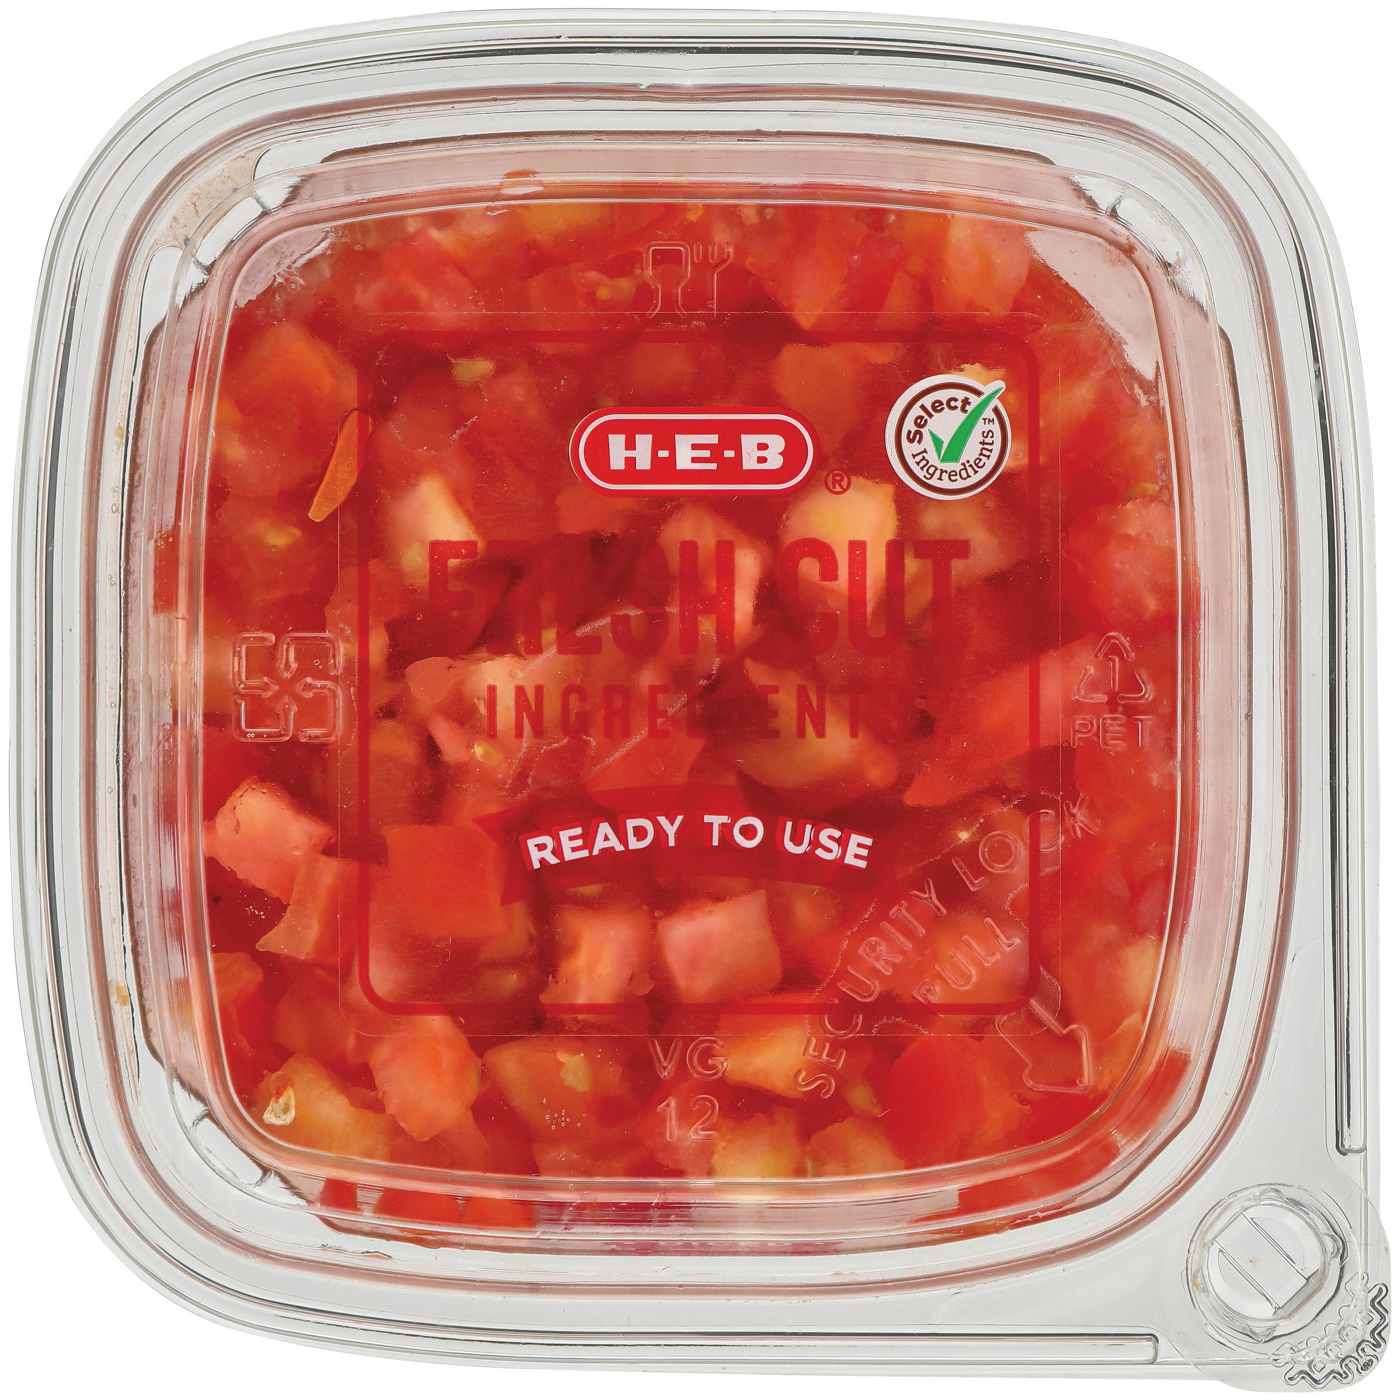 H-E-B Fresh Diced Tomatoes; image 2 of 2